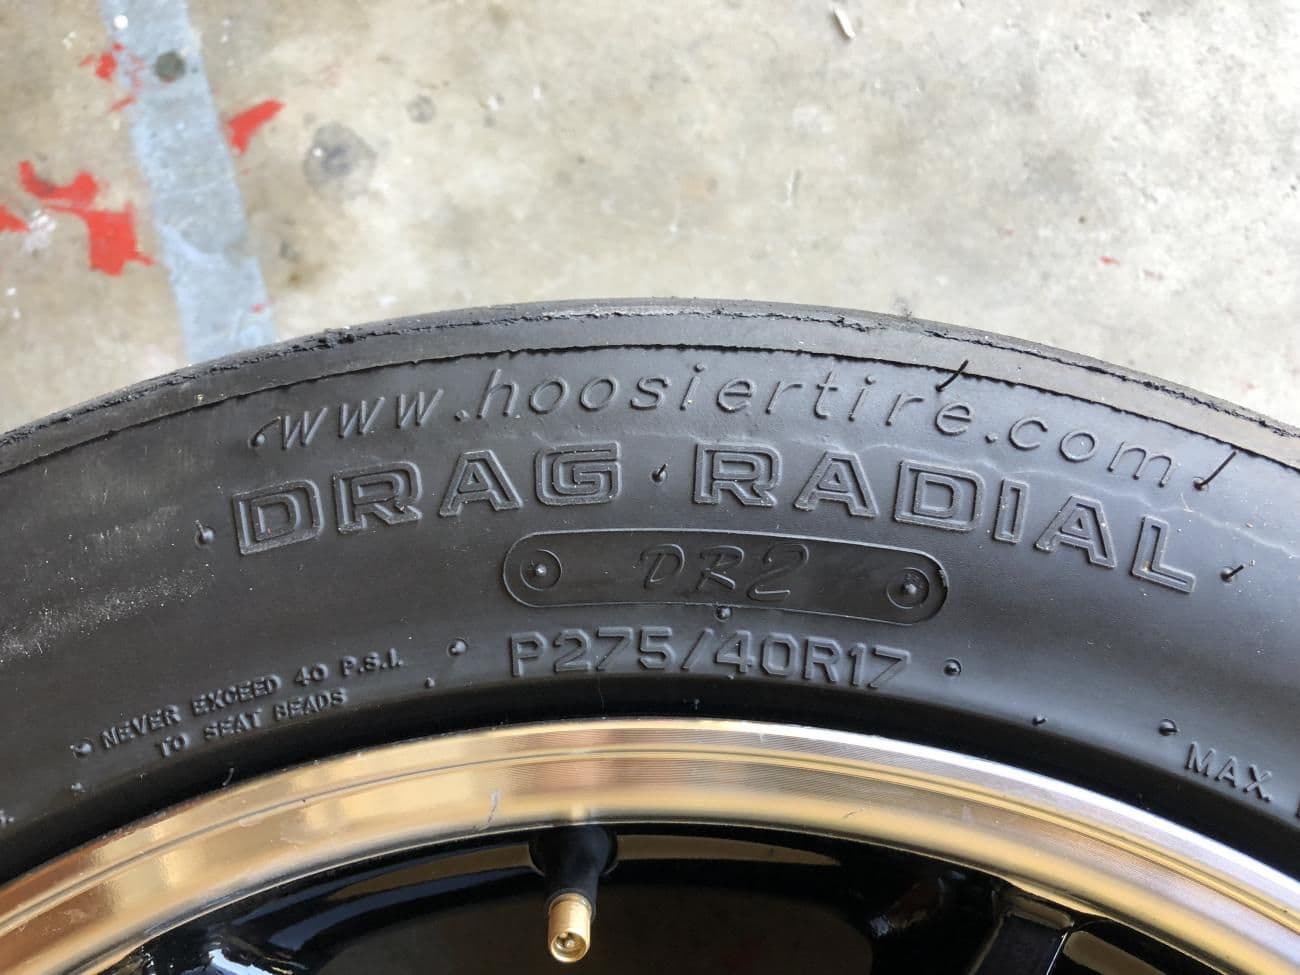  - Z06 rims with Hoosier Drag radials - San Diego, CA 92119, United States